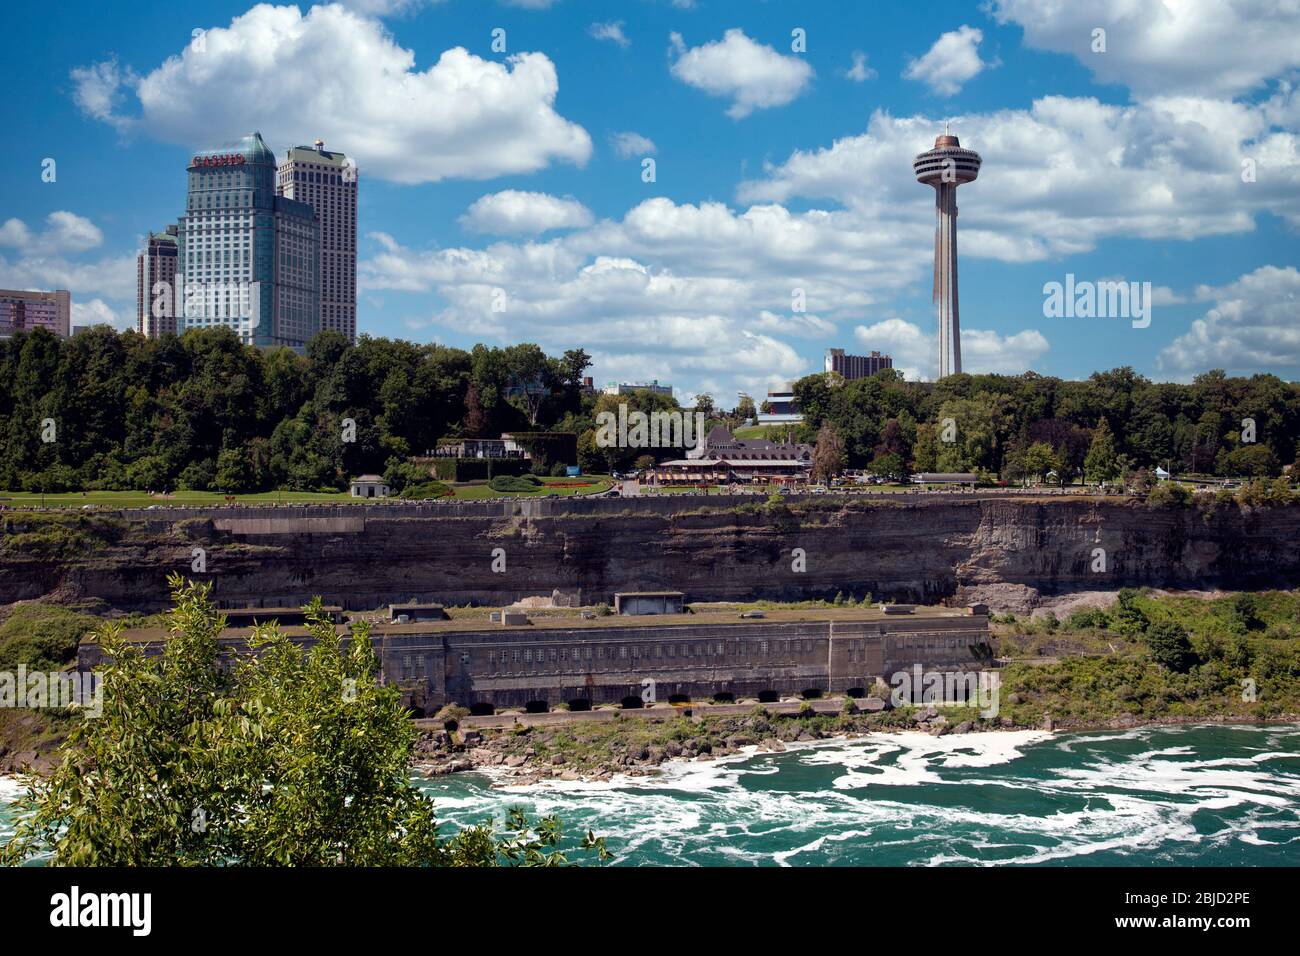 America, Canada, Ontario, New York, view of American side of Niagara Falls to the city of Niagara Falls in Ontario, Canada, North America Stock Photo